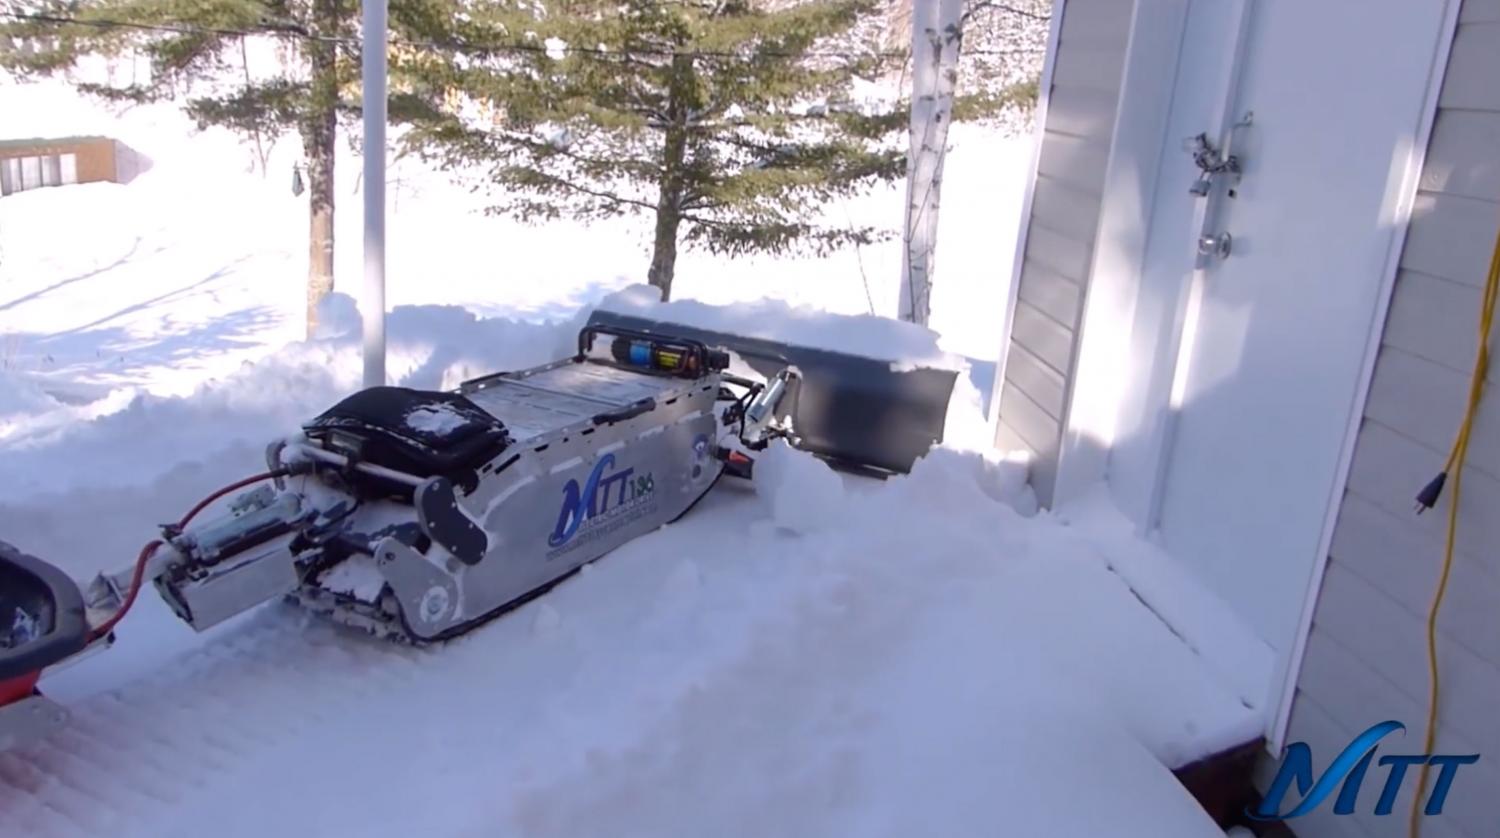 MMT i36 all-terrain electric tank track snow machine locomotive